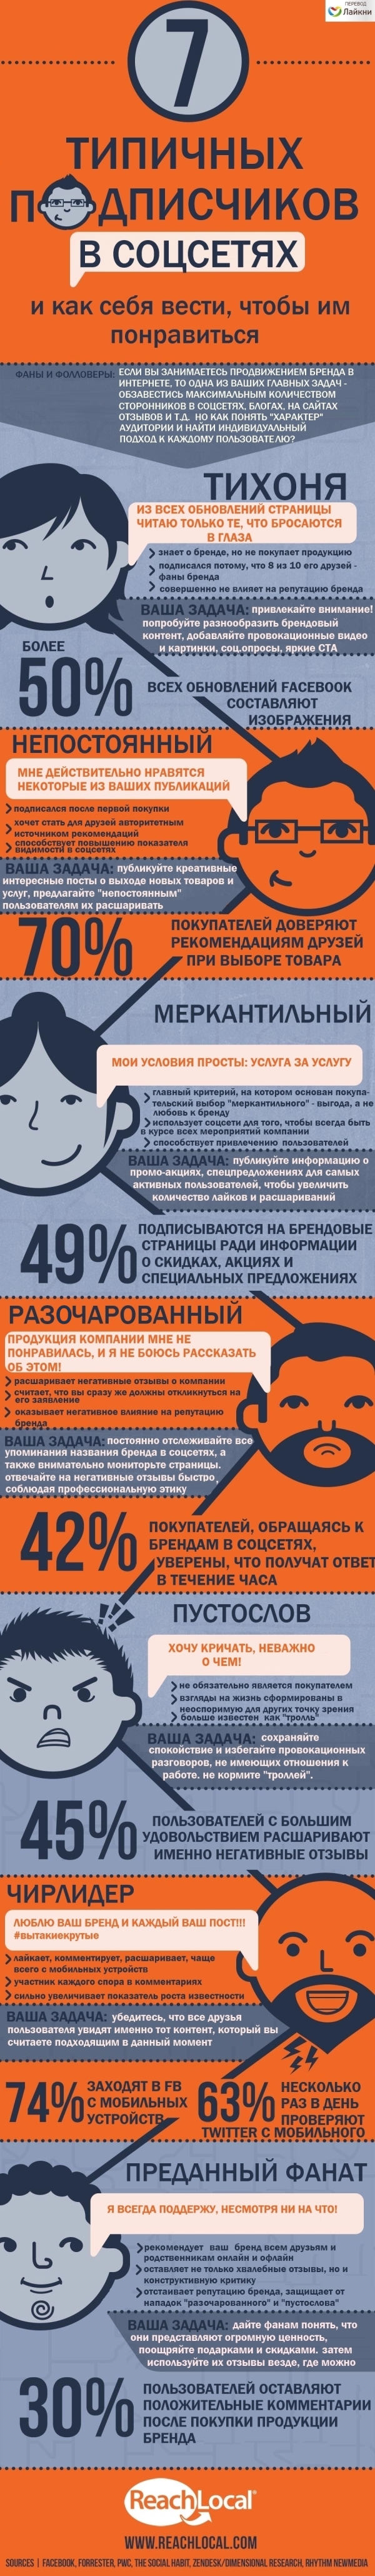 infographica